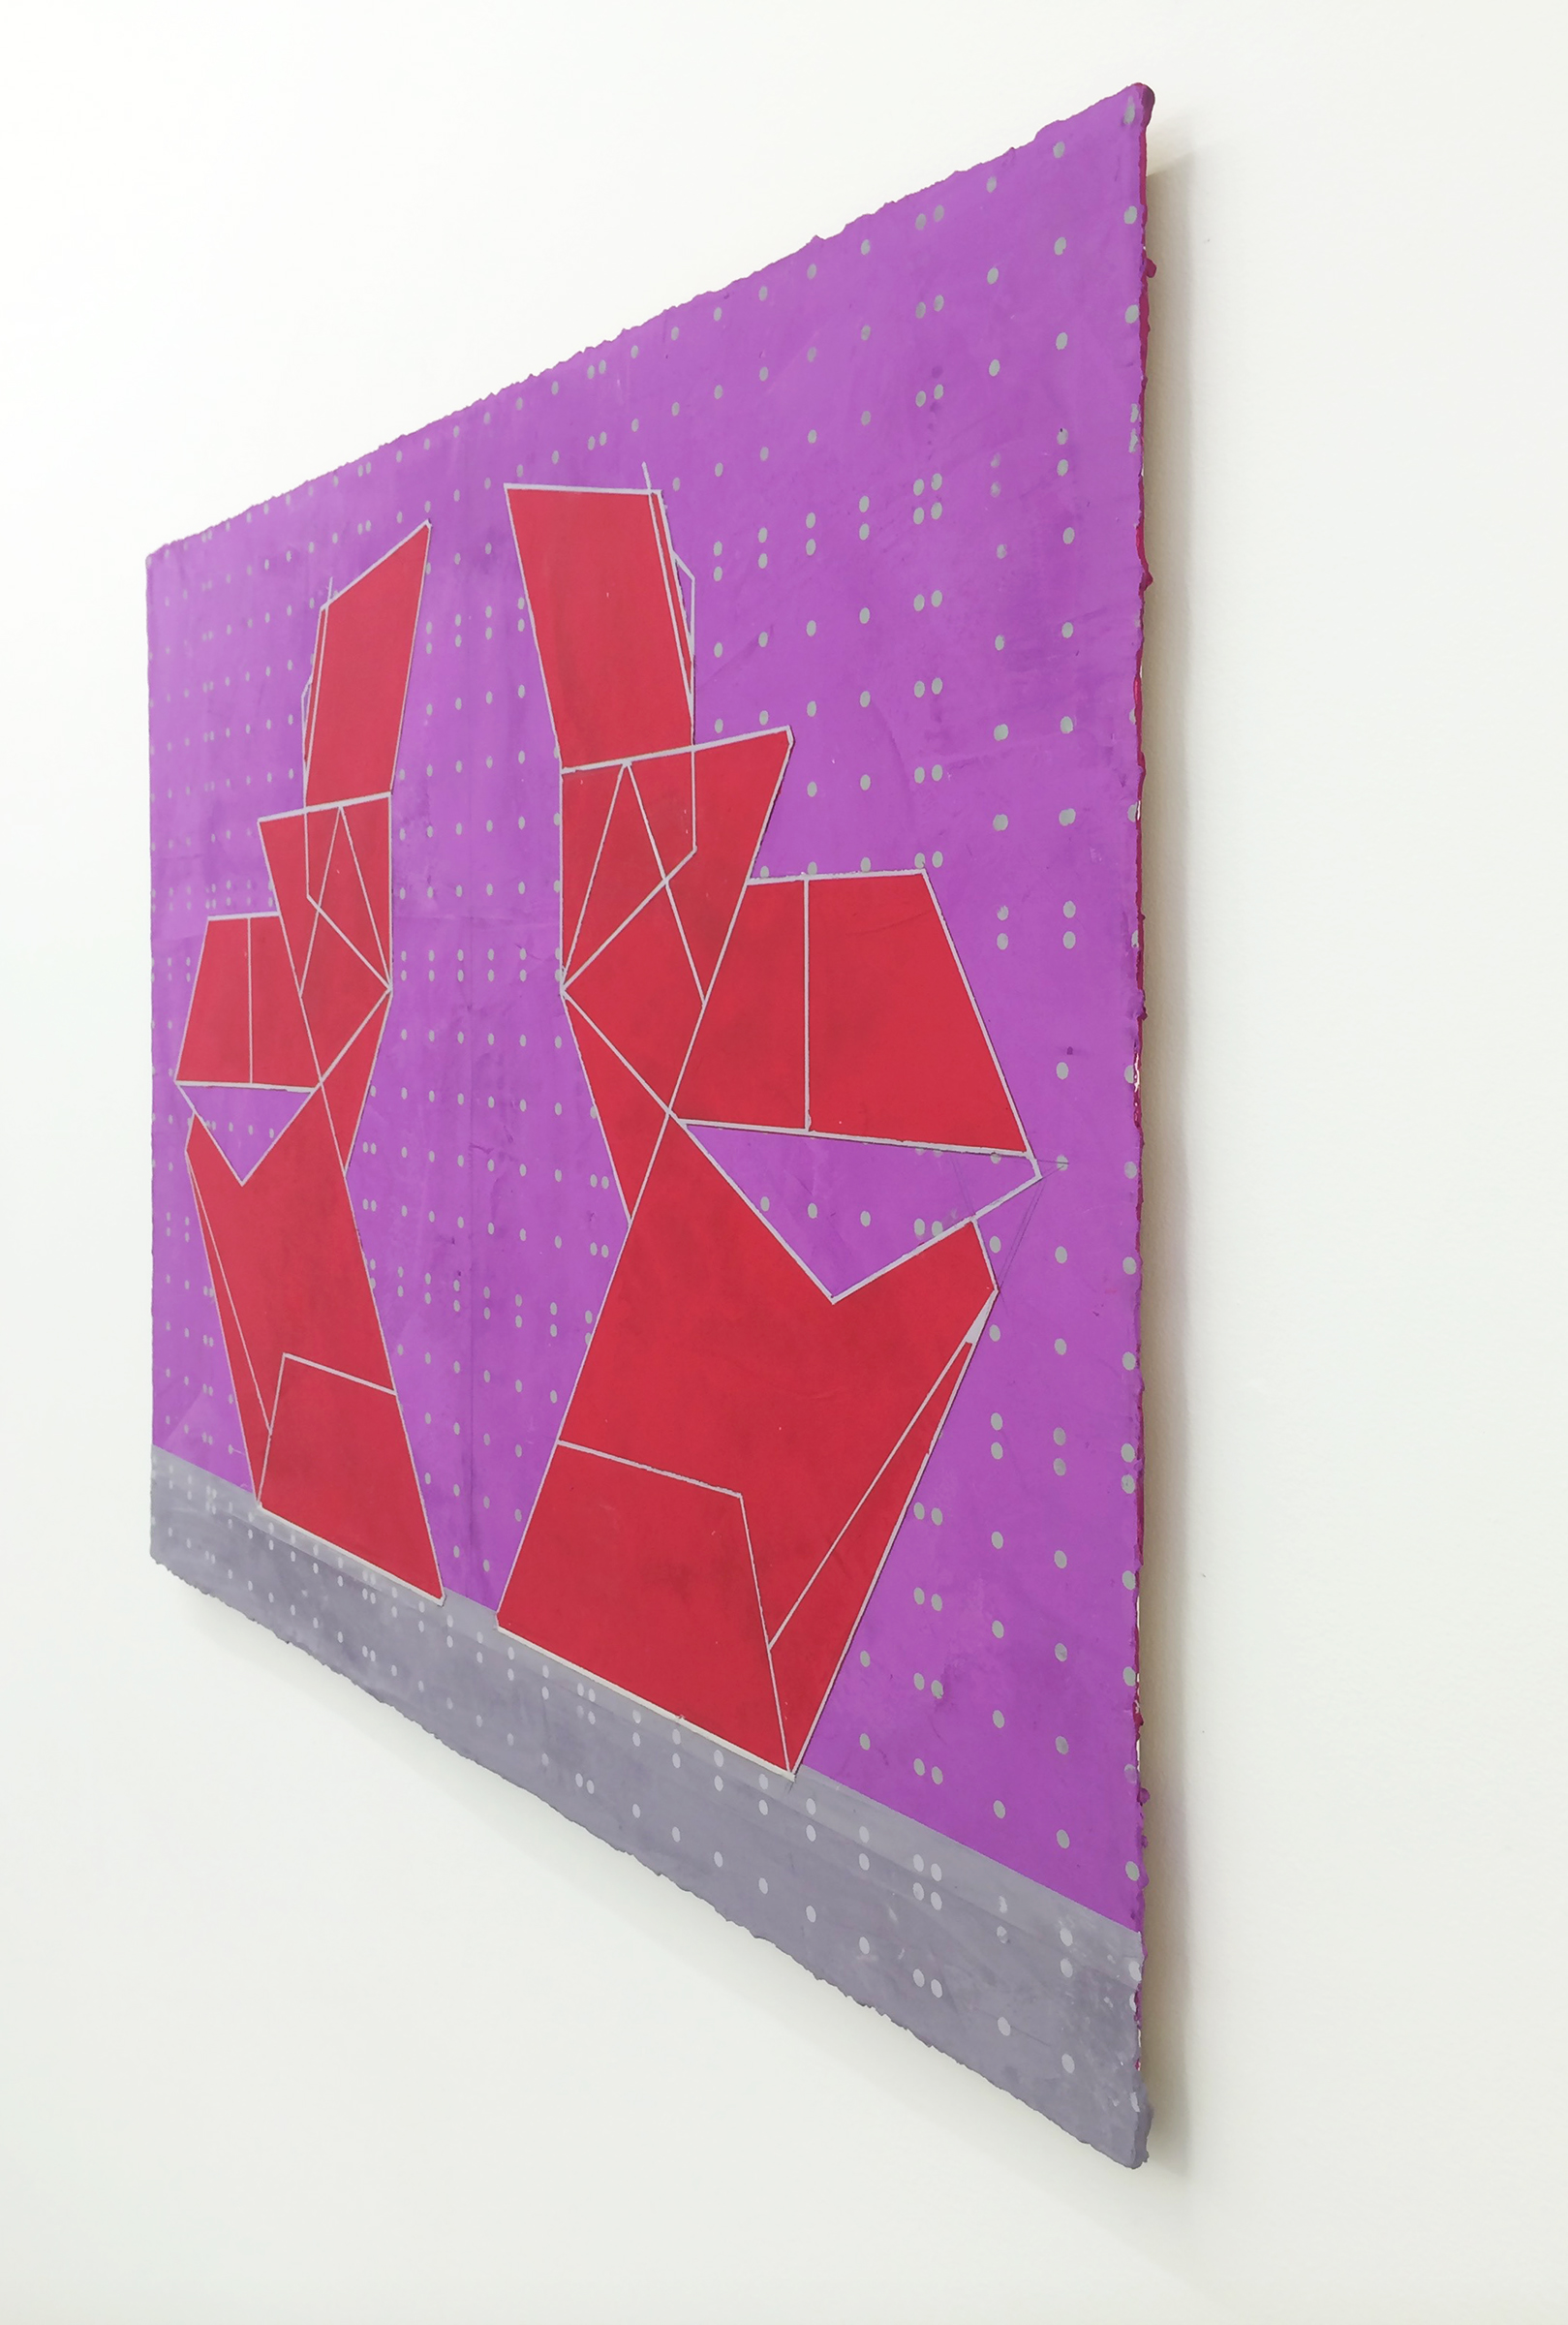   ELISE FERGUSON  (profile) Tropic , 2016, pigmented plaster on panel, 30" x 40" 